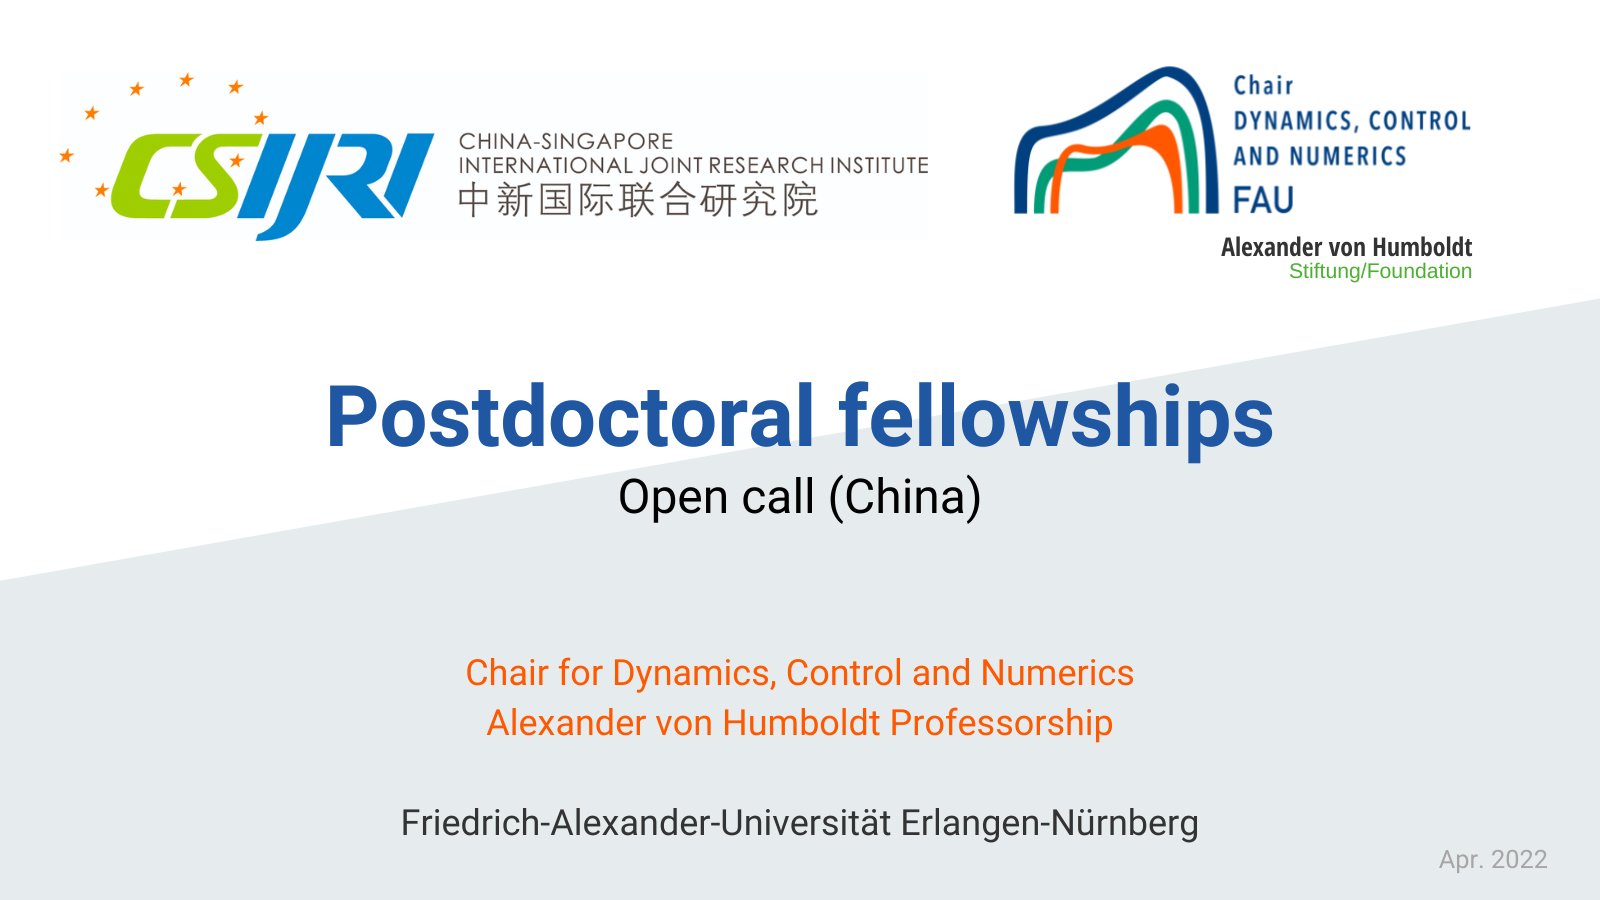 FAU Chair for Dynamics, Control and Numerics - Alexander von Humboldt Professorship